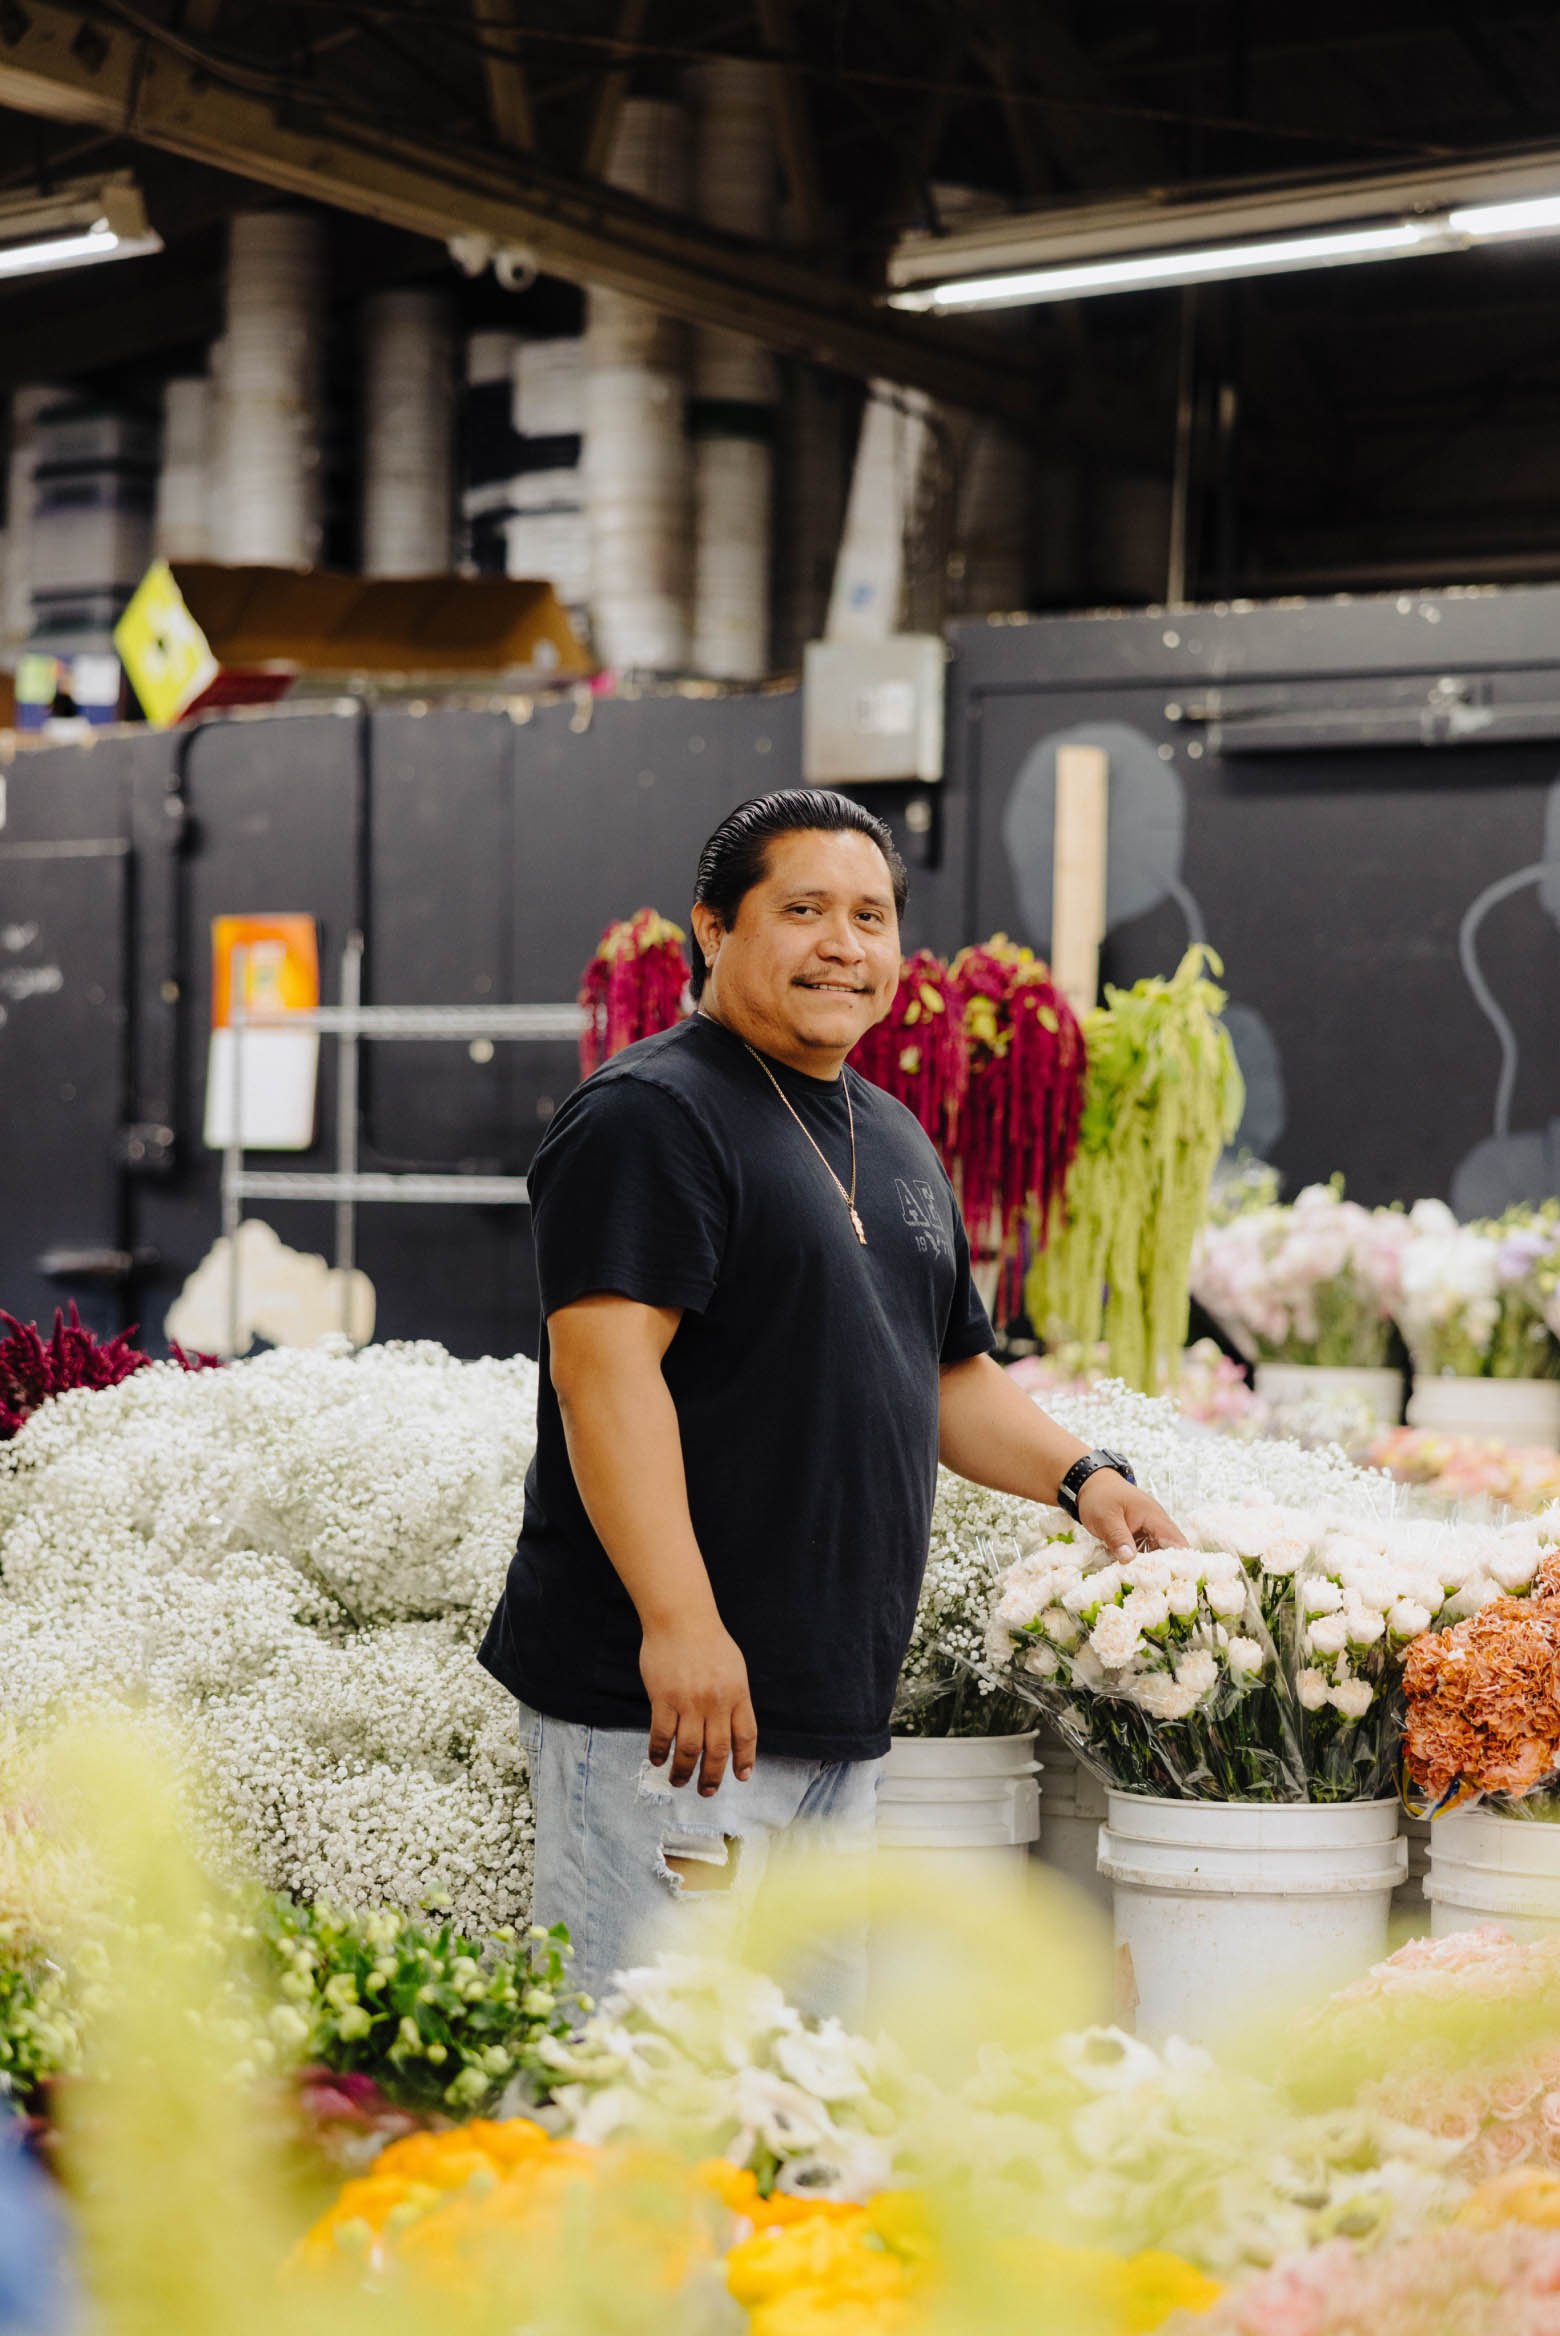 Boulevard Florist :: Wholesale Florist and Flowers in Los Angeles